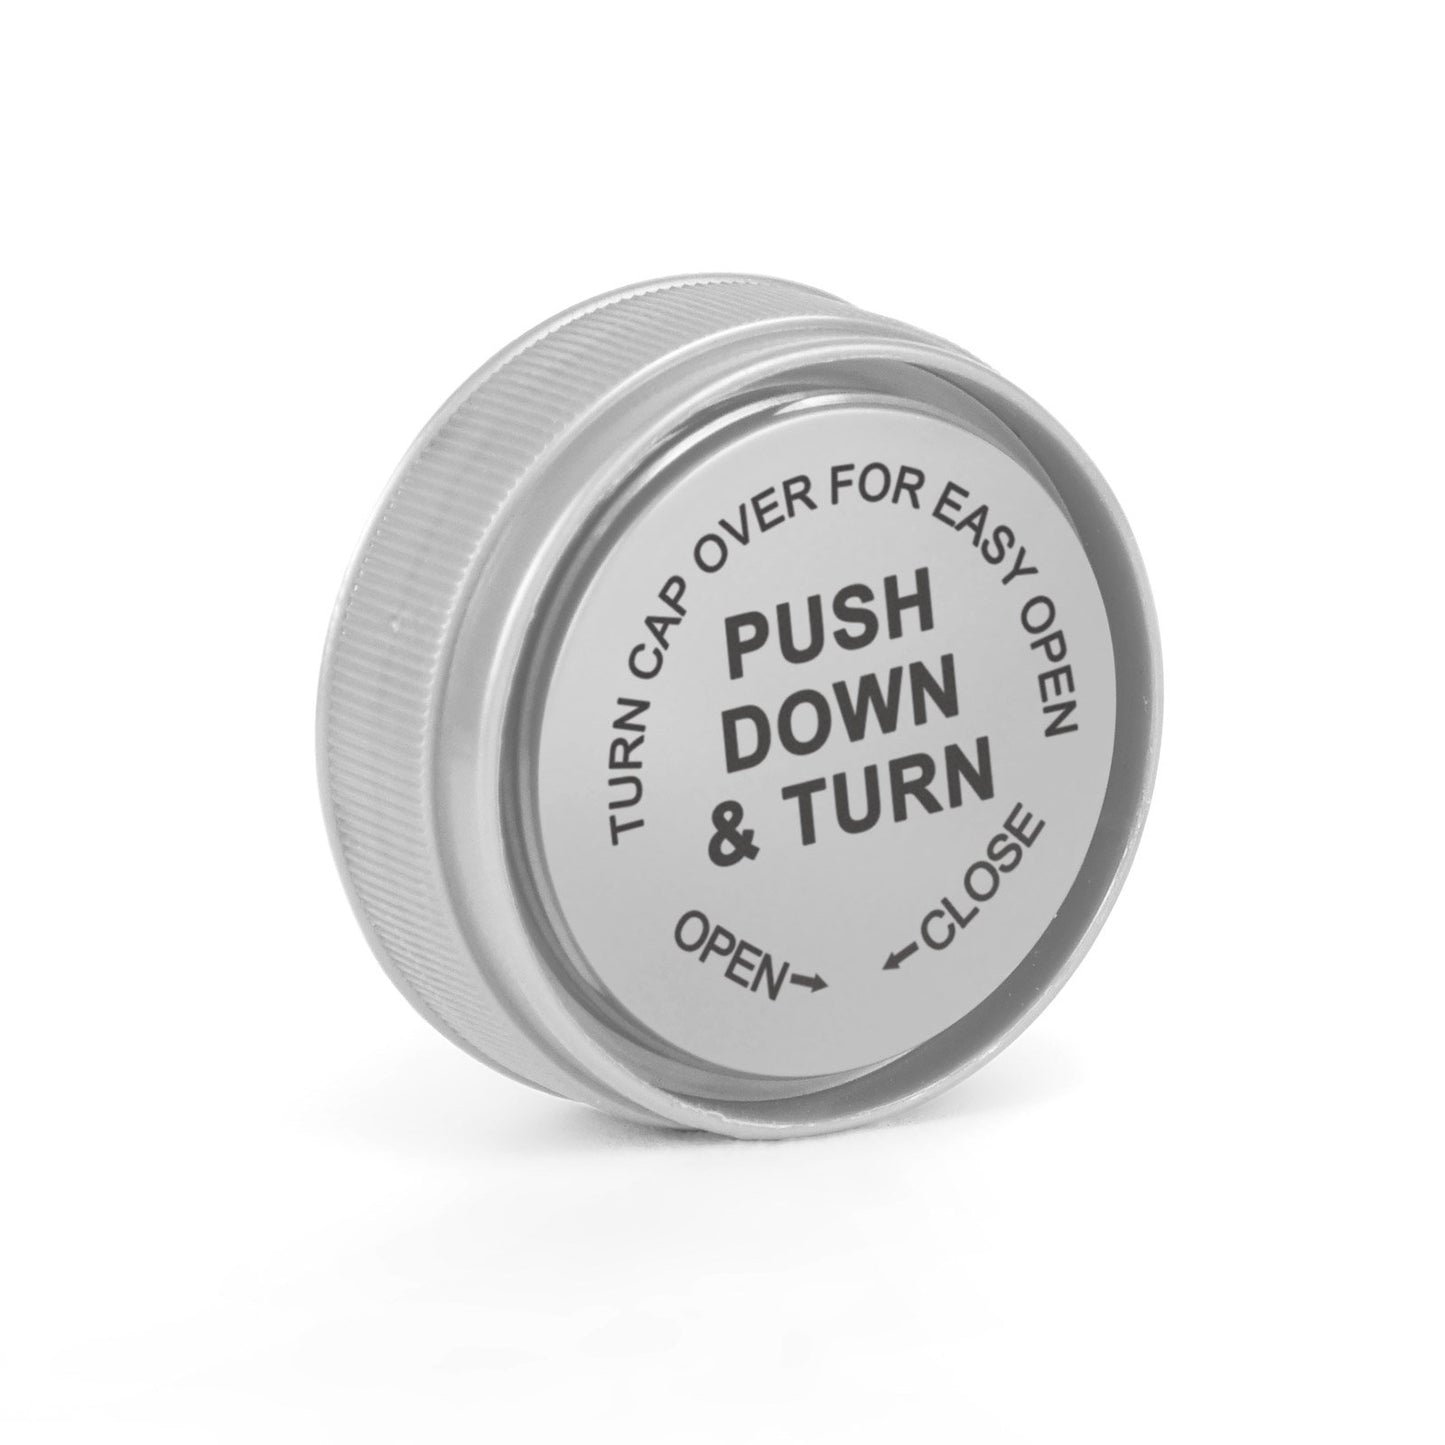 20 Dram Push Down & Turn Cap Opaque Silver - 240 COUNT